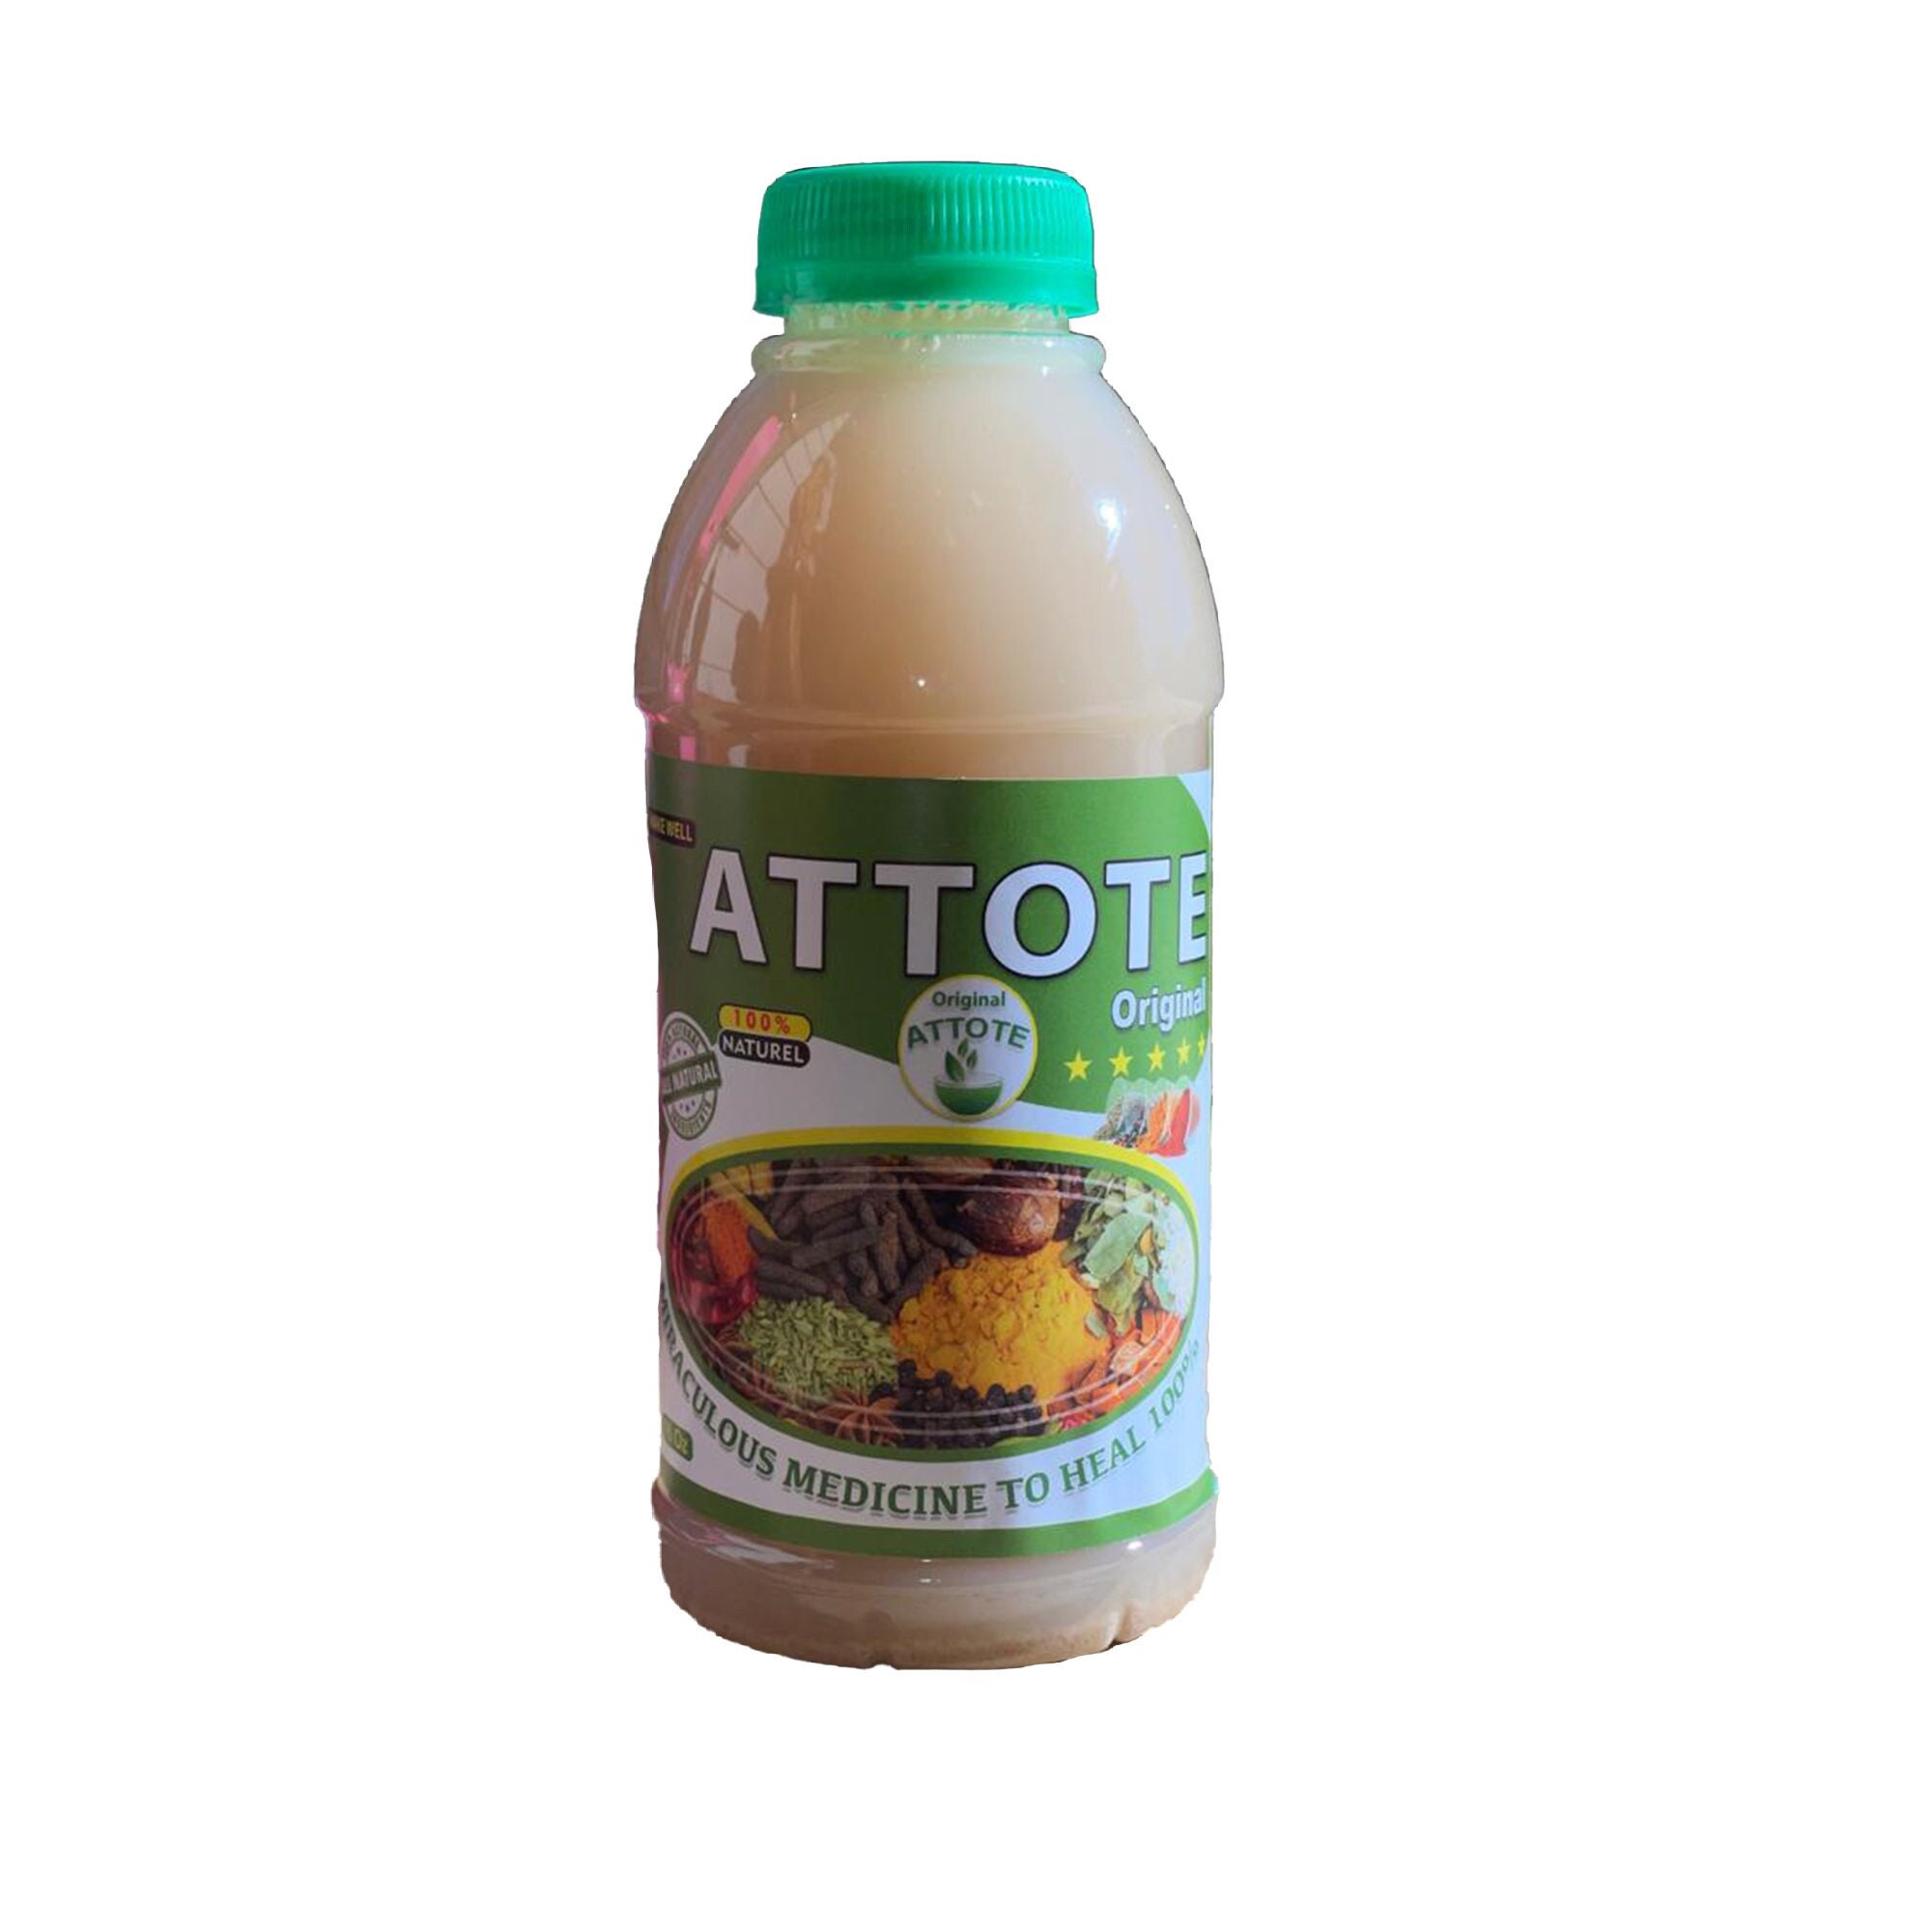 Attote Original 100% AUTHENTIC Herbal Drink Great Peformance Great for Men  -  Australia